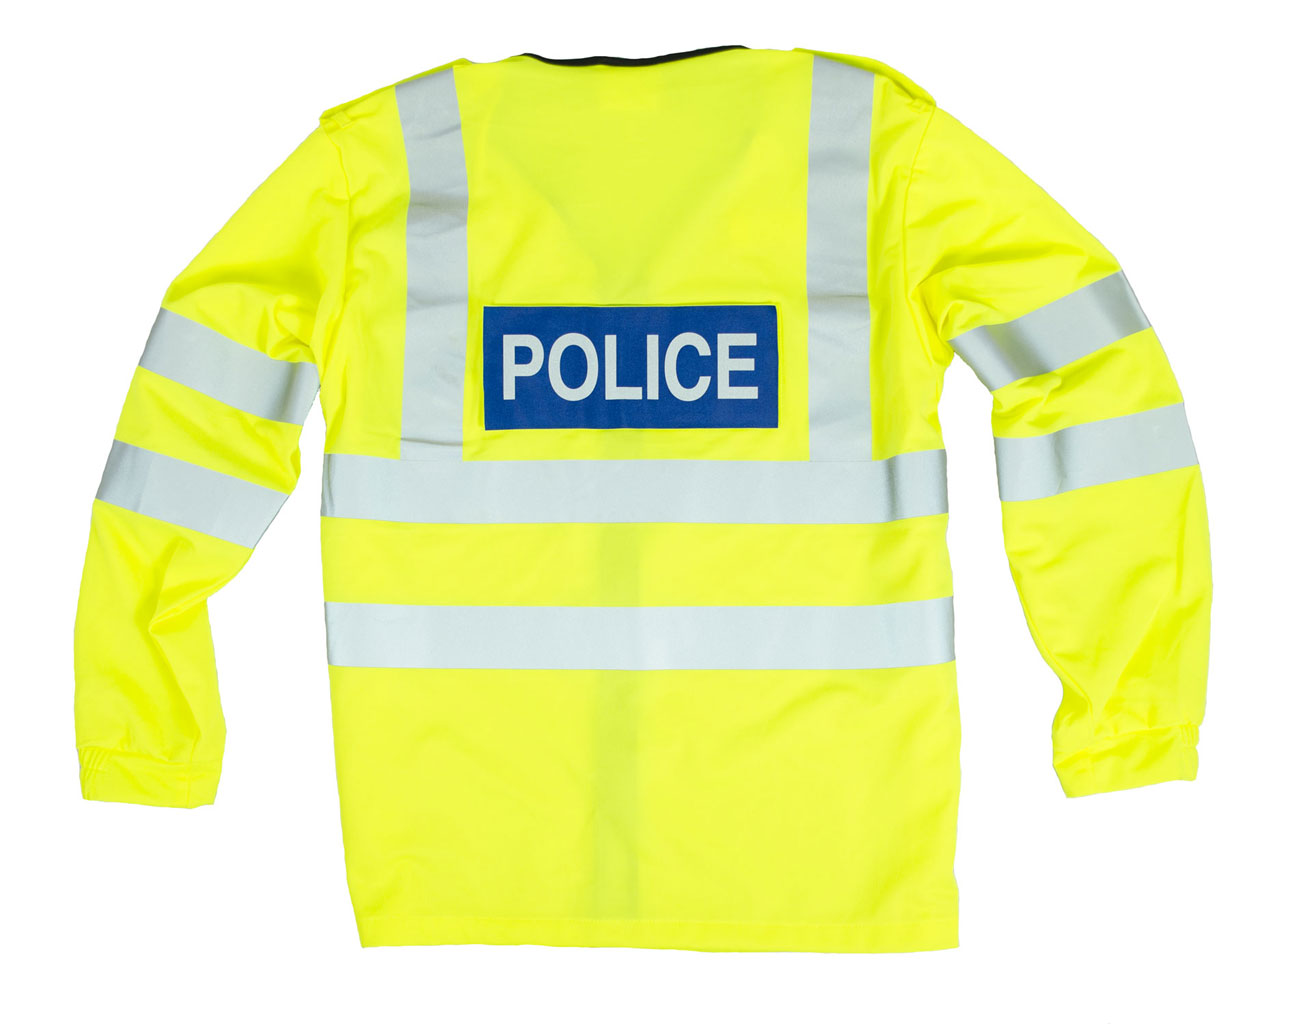 Ветровка-накидка POLICE светоотражающая Англия